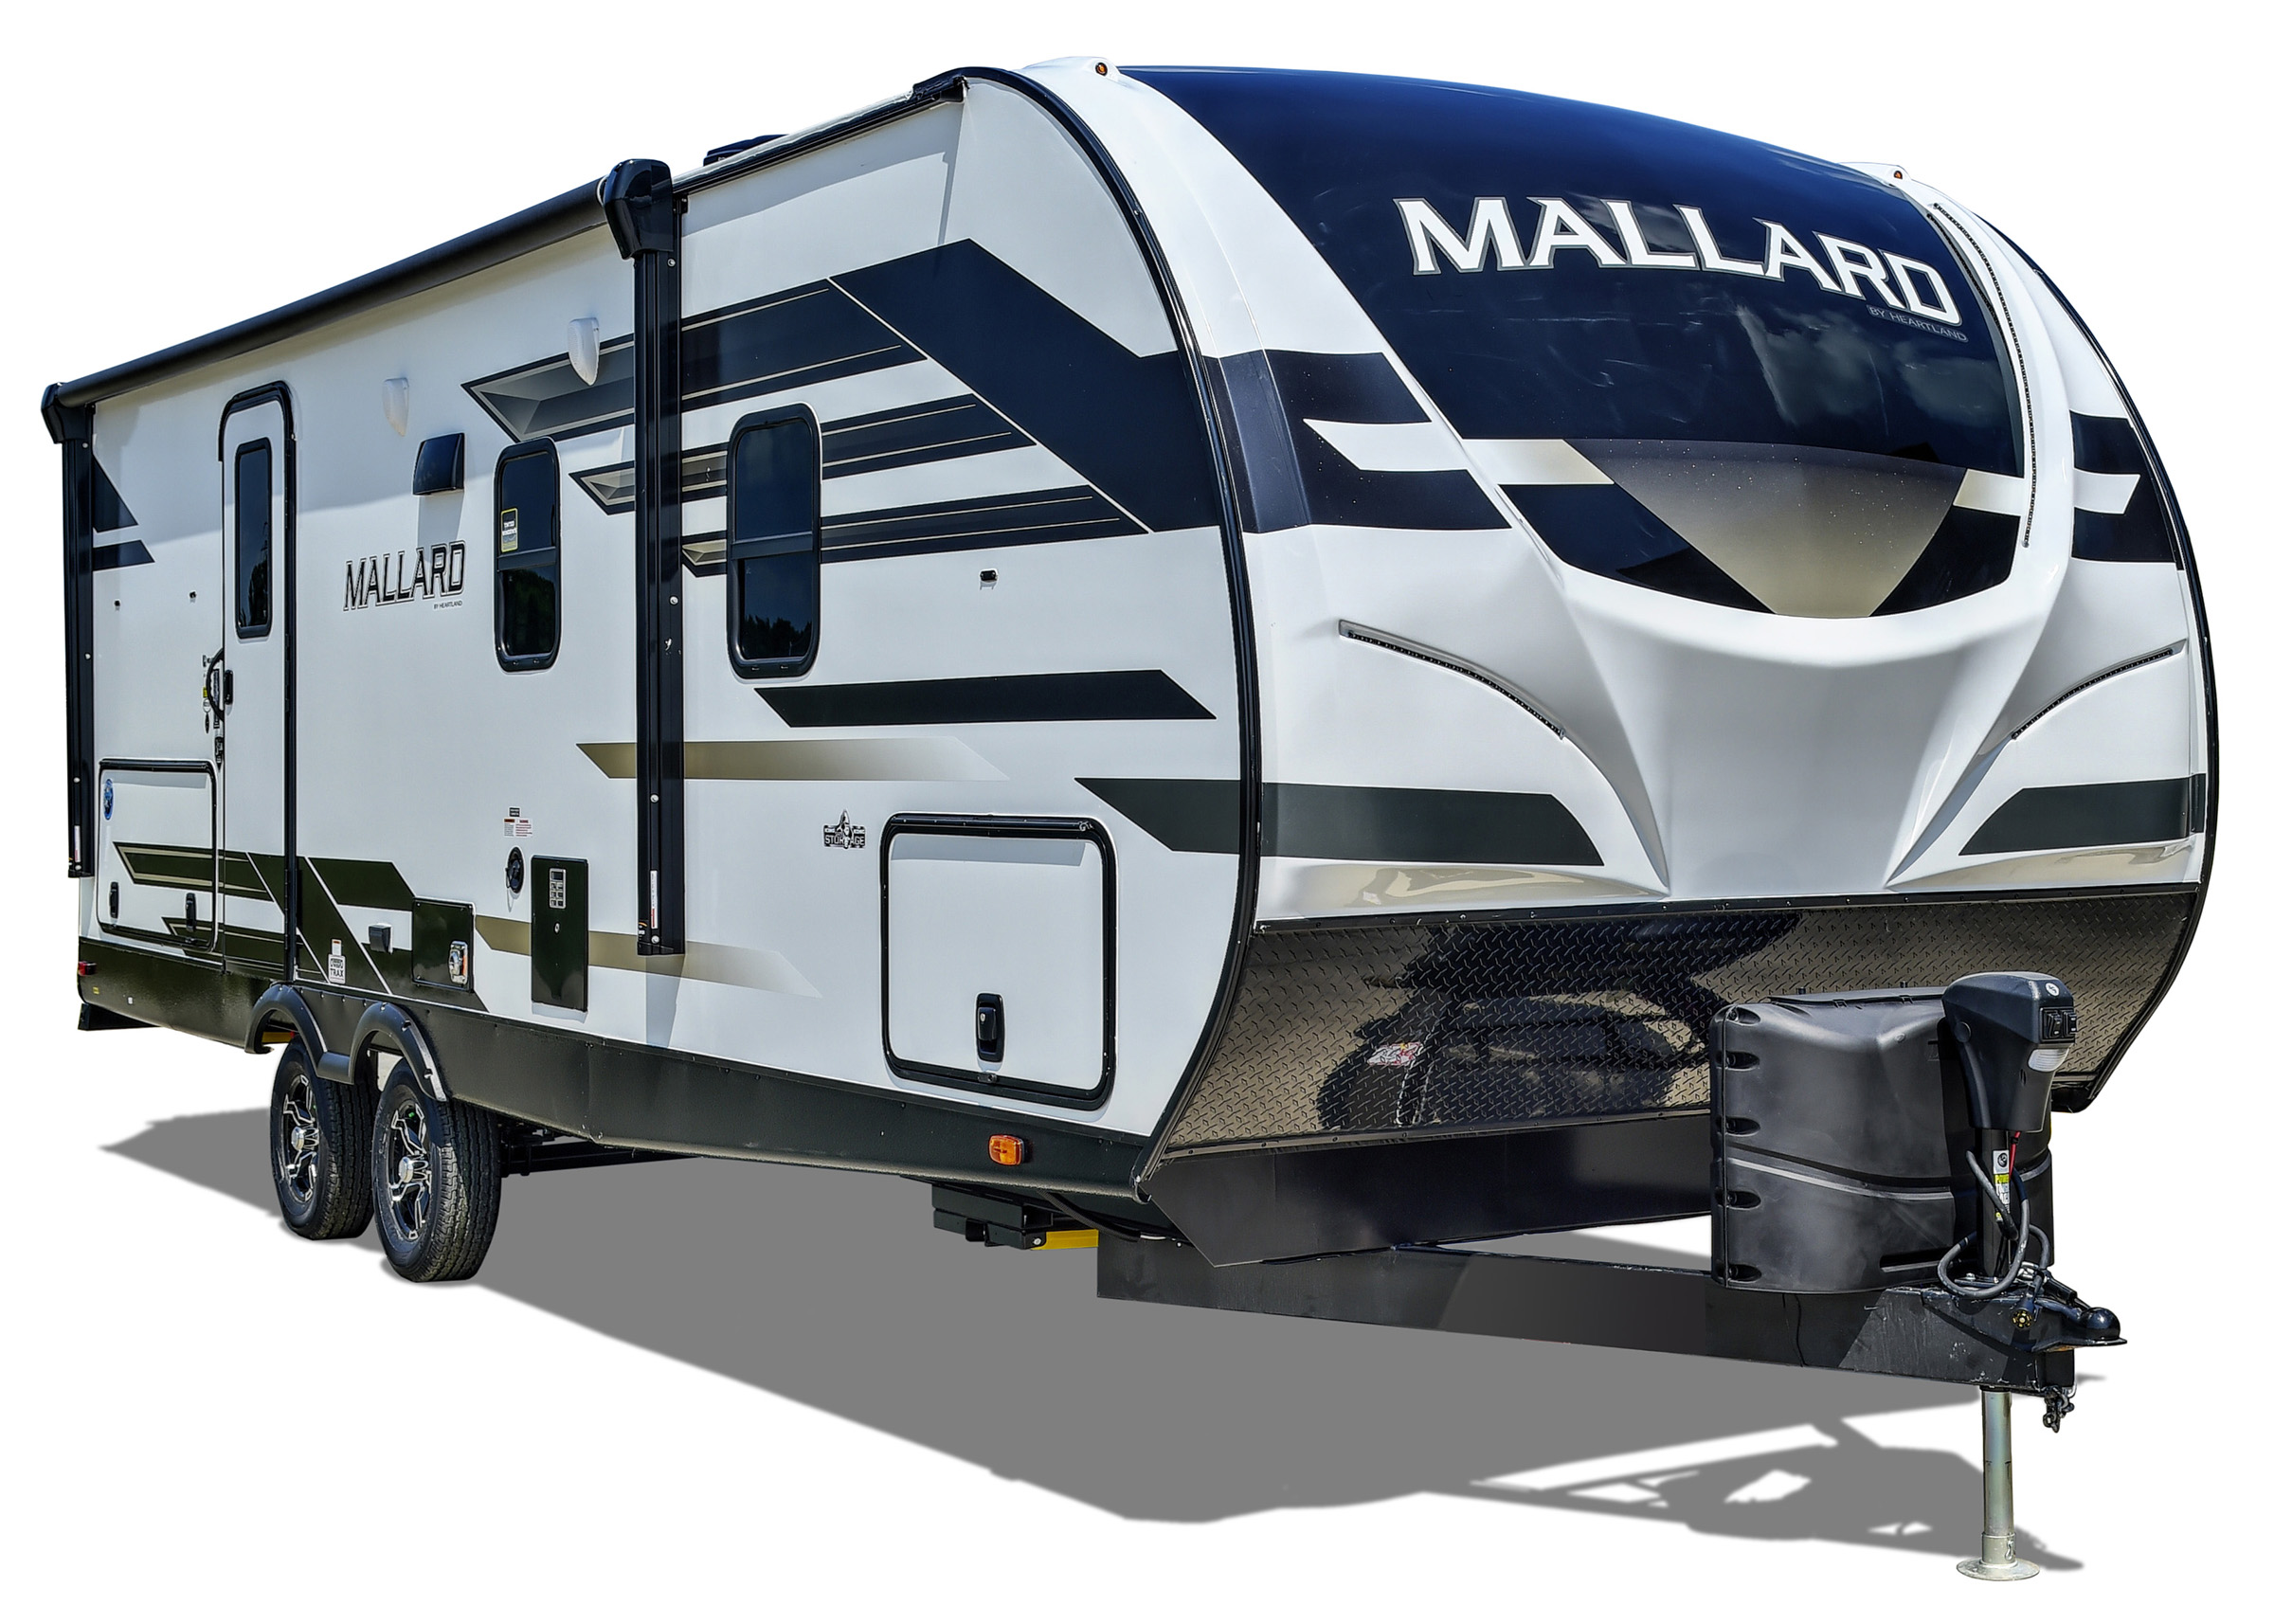 heartland mallard travel trailer dealer